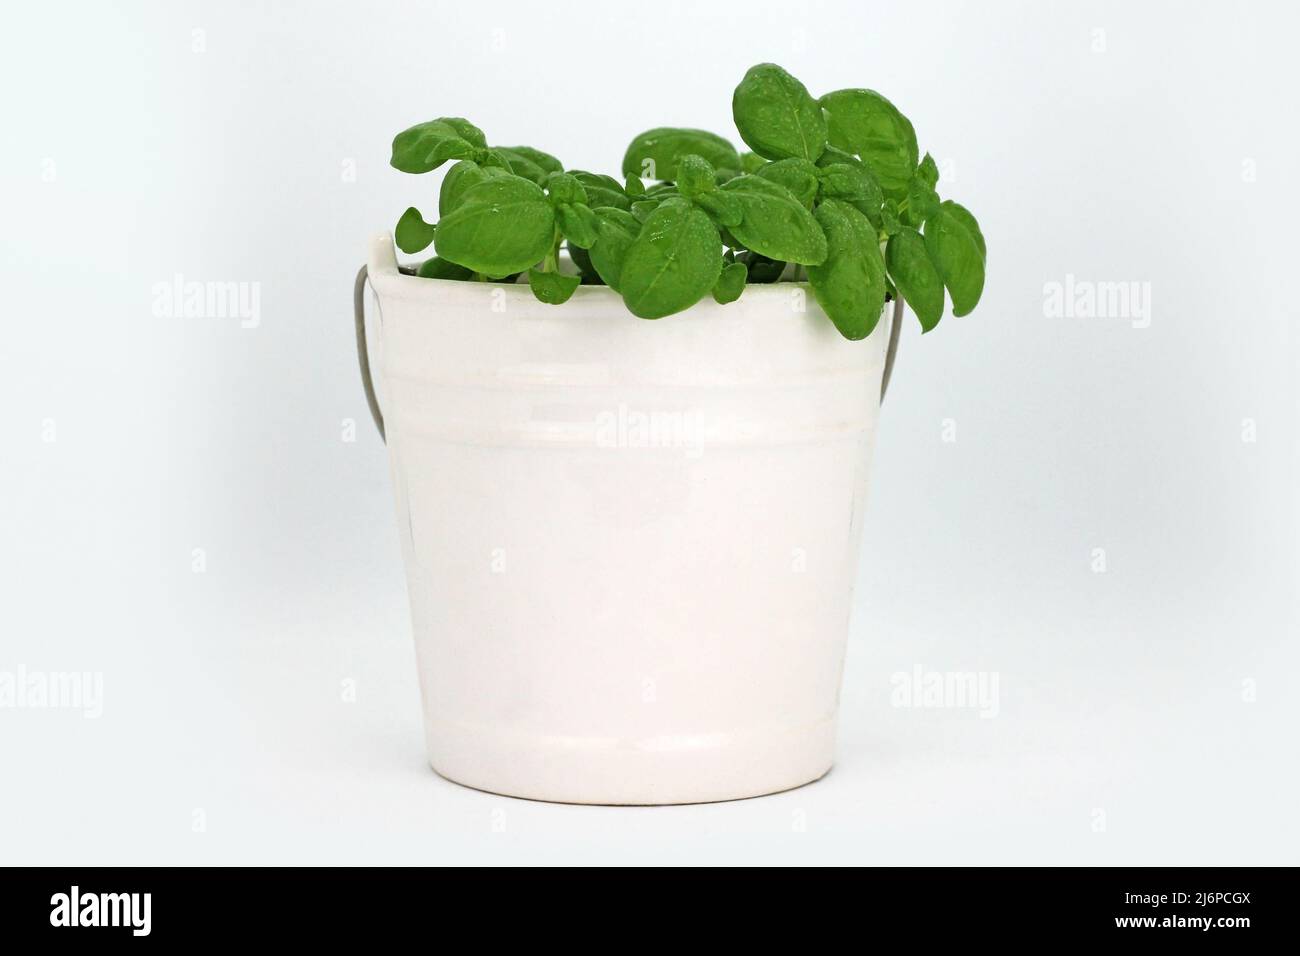 Basil plant in ceramic pot on white background. Studio shot. Stock Photo